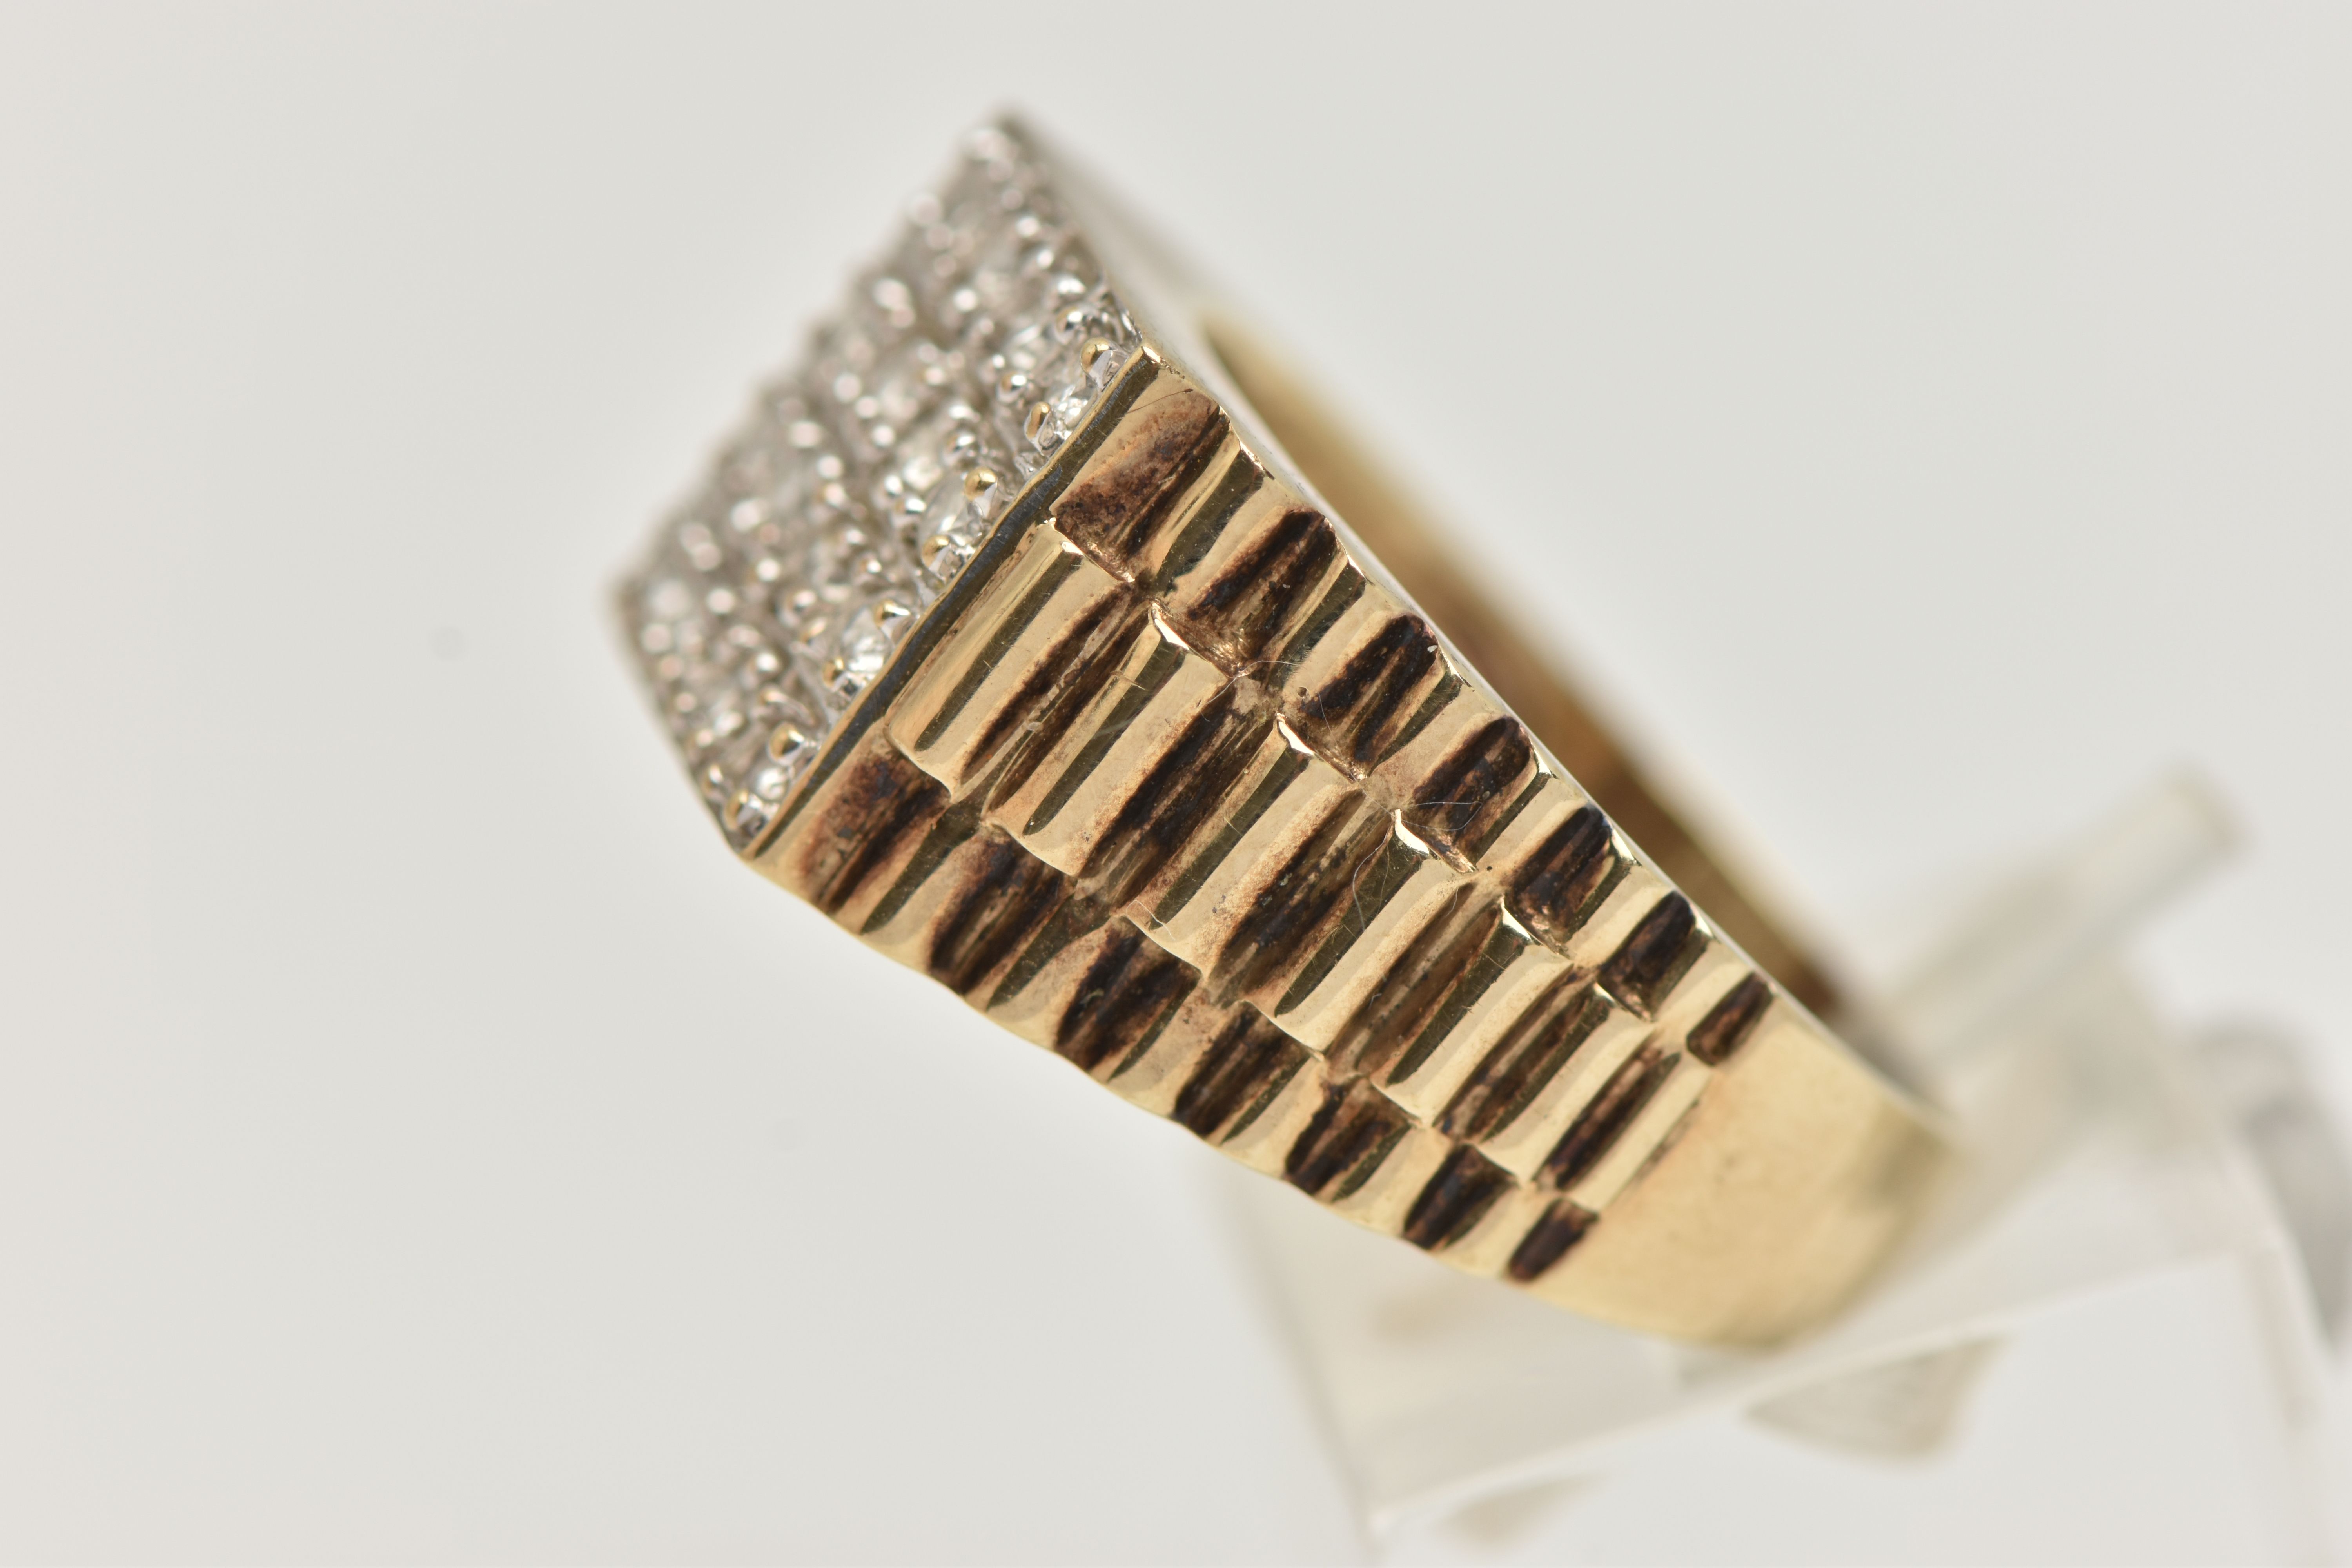 A GENTS DIAMOND ROLEX STYLE SIGNET RING, twenty four round brilliant cut diamonds, pave set in white - Image 2 of 5